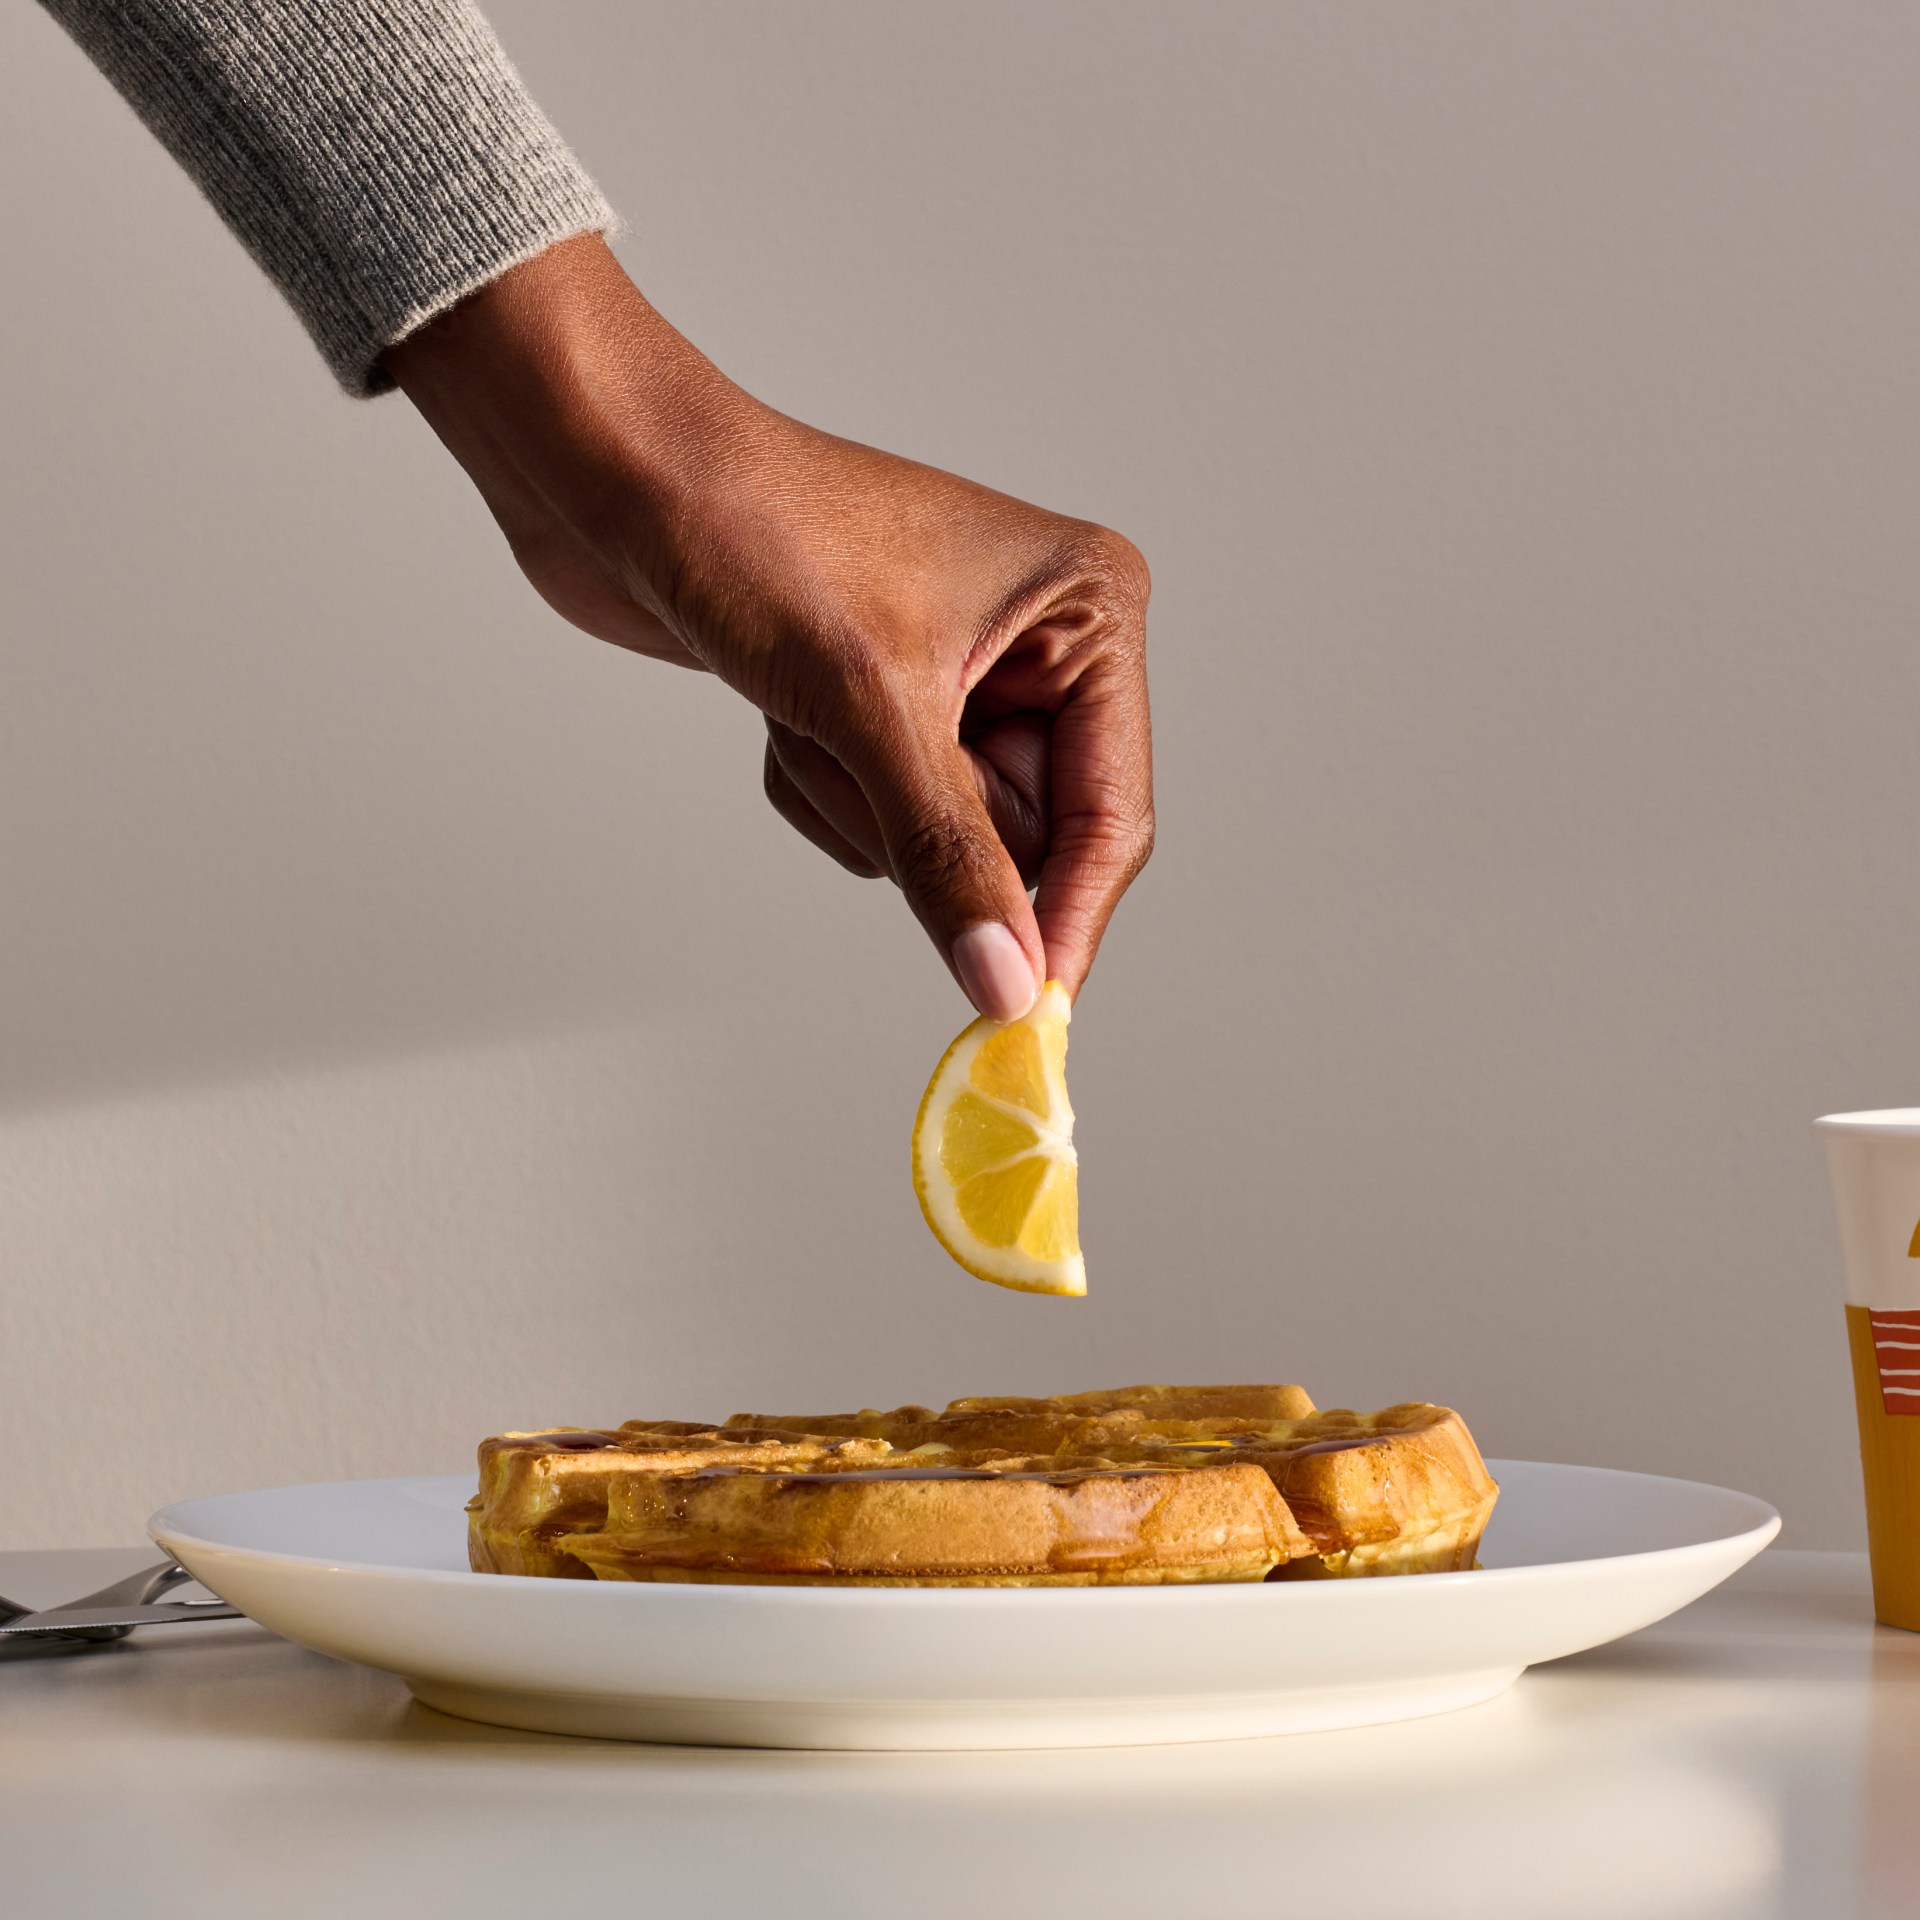 Hampton by Hilton Lemon Waffles - hand holding a lemon over a waffle and breakfast spread